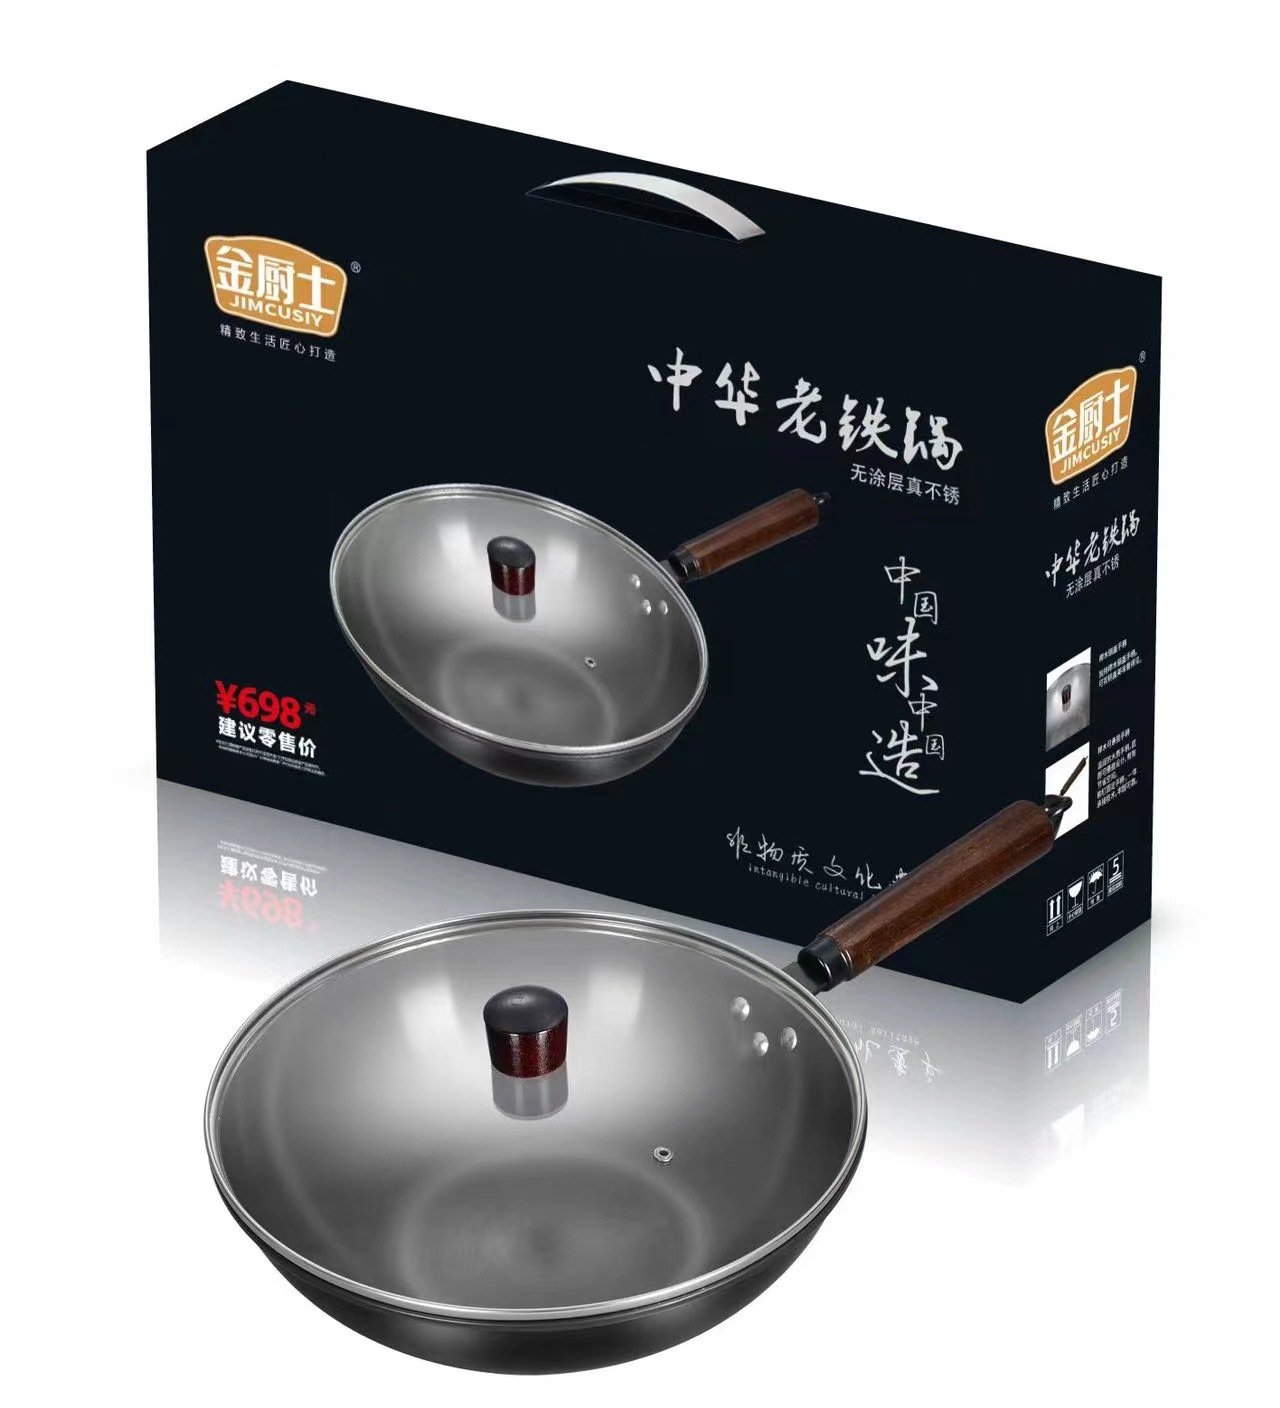 New Wok Zhangqiu Iron Pan Uncoated Non-Stick Pan Hand-Forged Old Iron Pan Meeting Sale Gift Pot Set